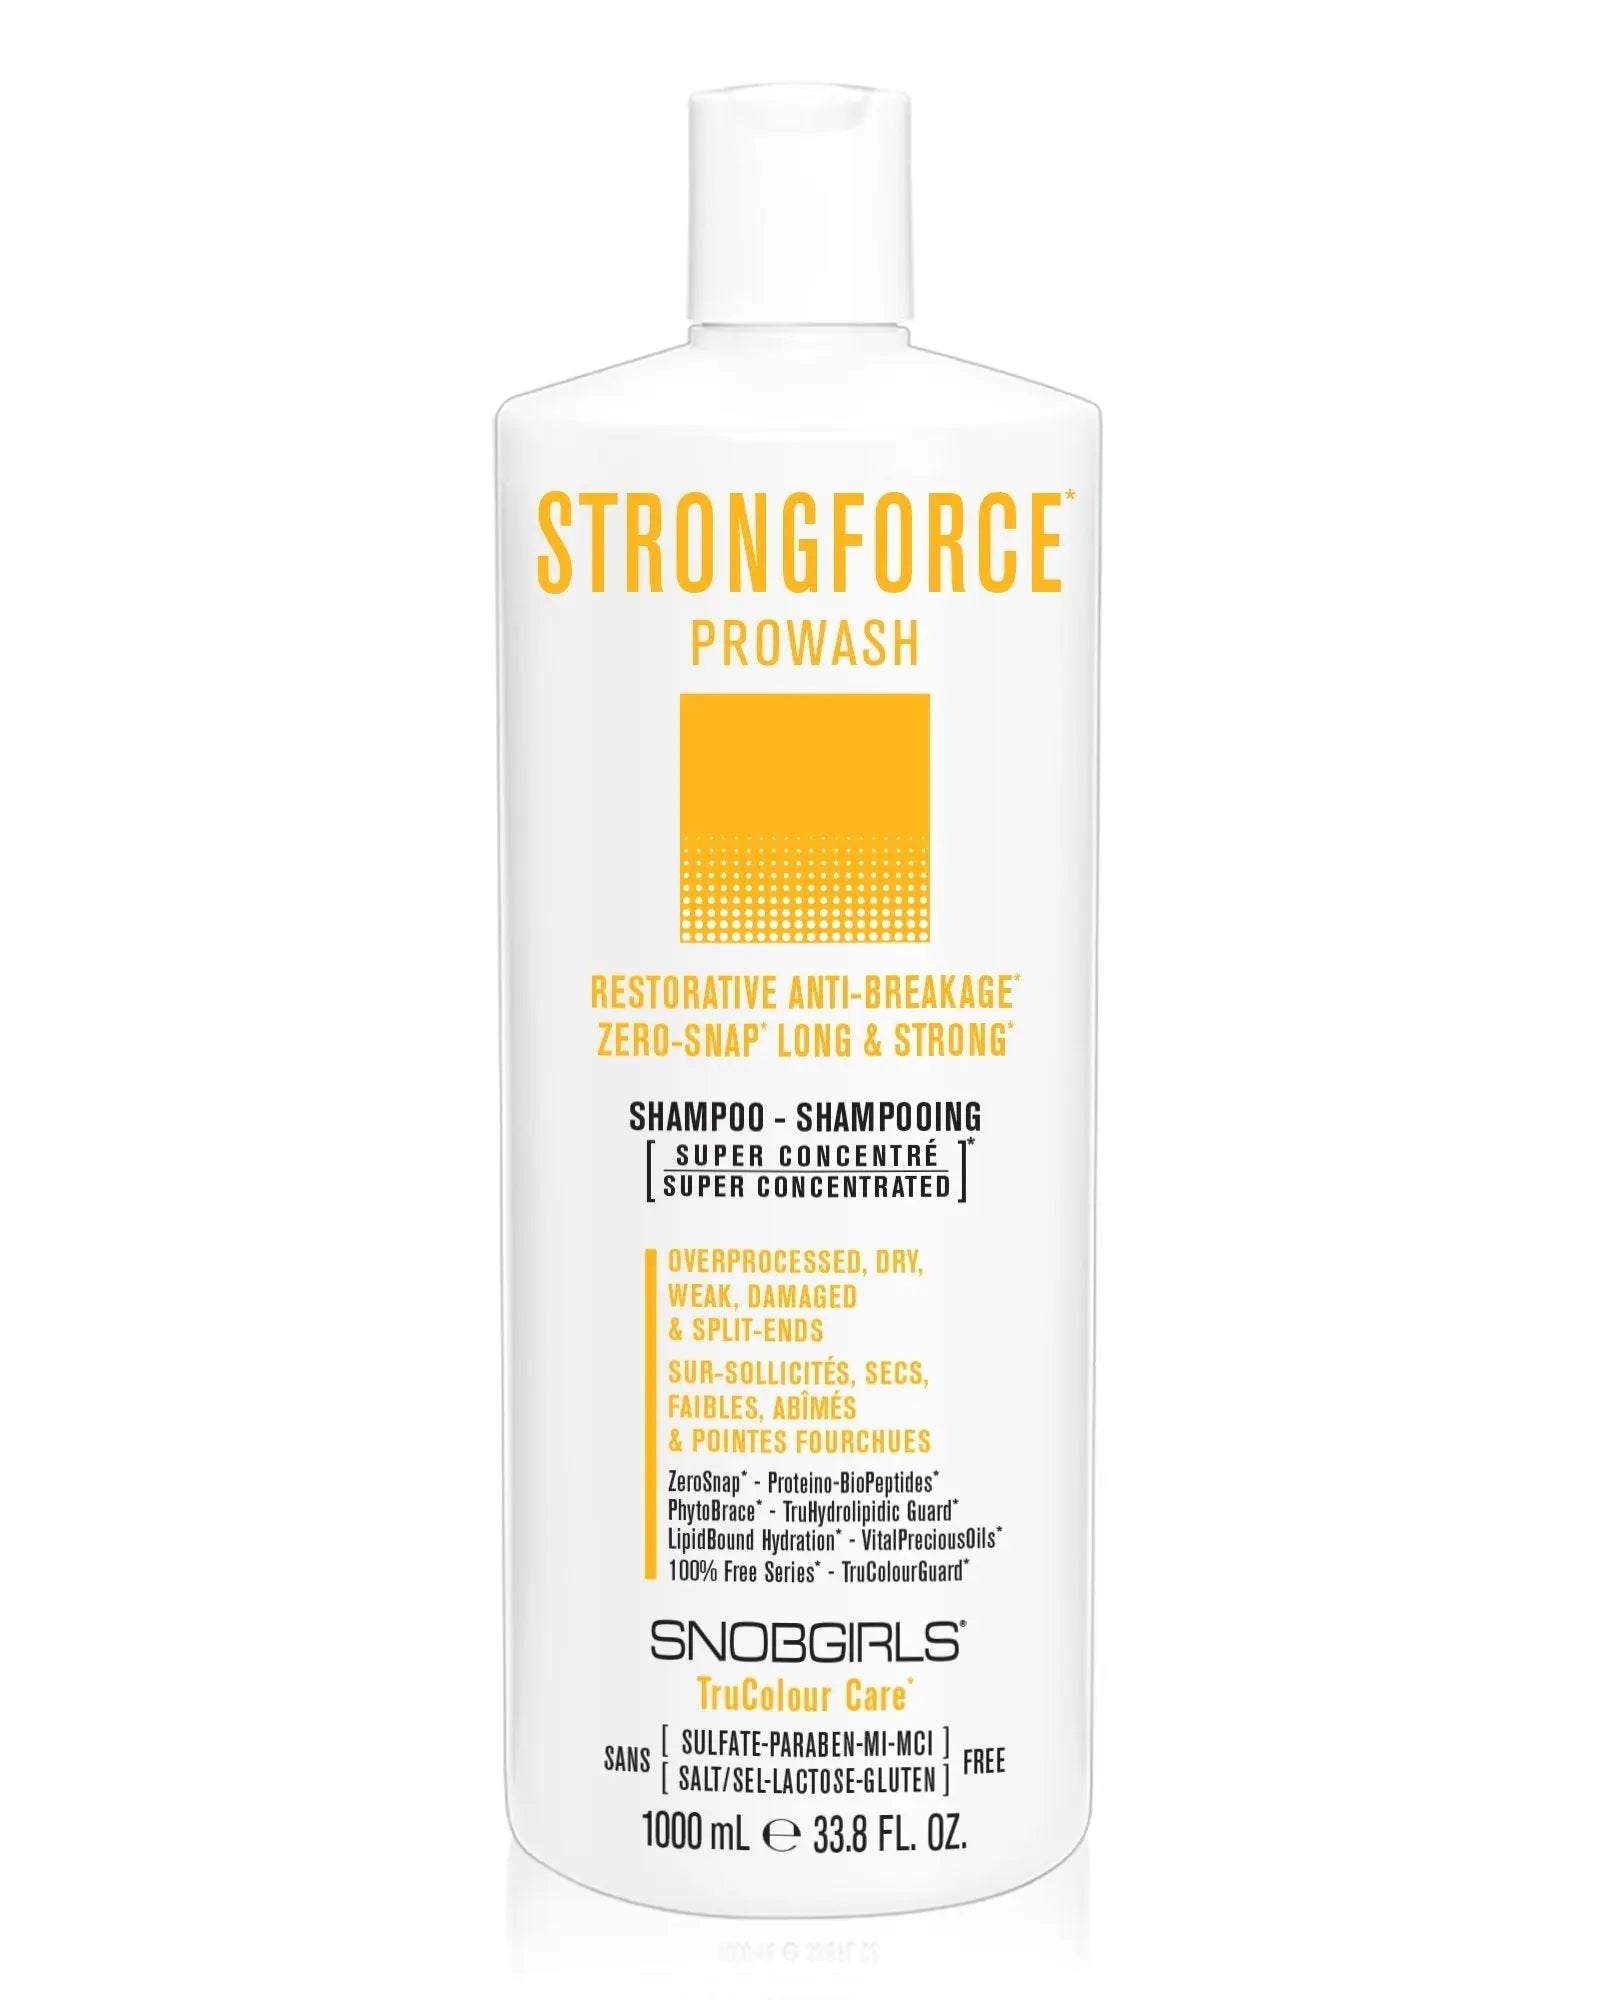 STRONGFORCE Prowash (shampoo) 1000 mL - SNOBGIRLS Canada